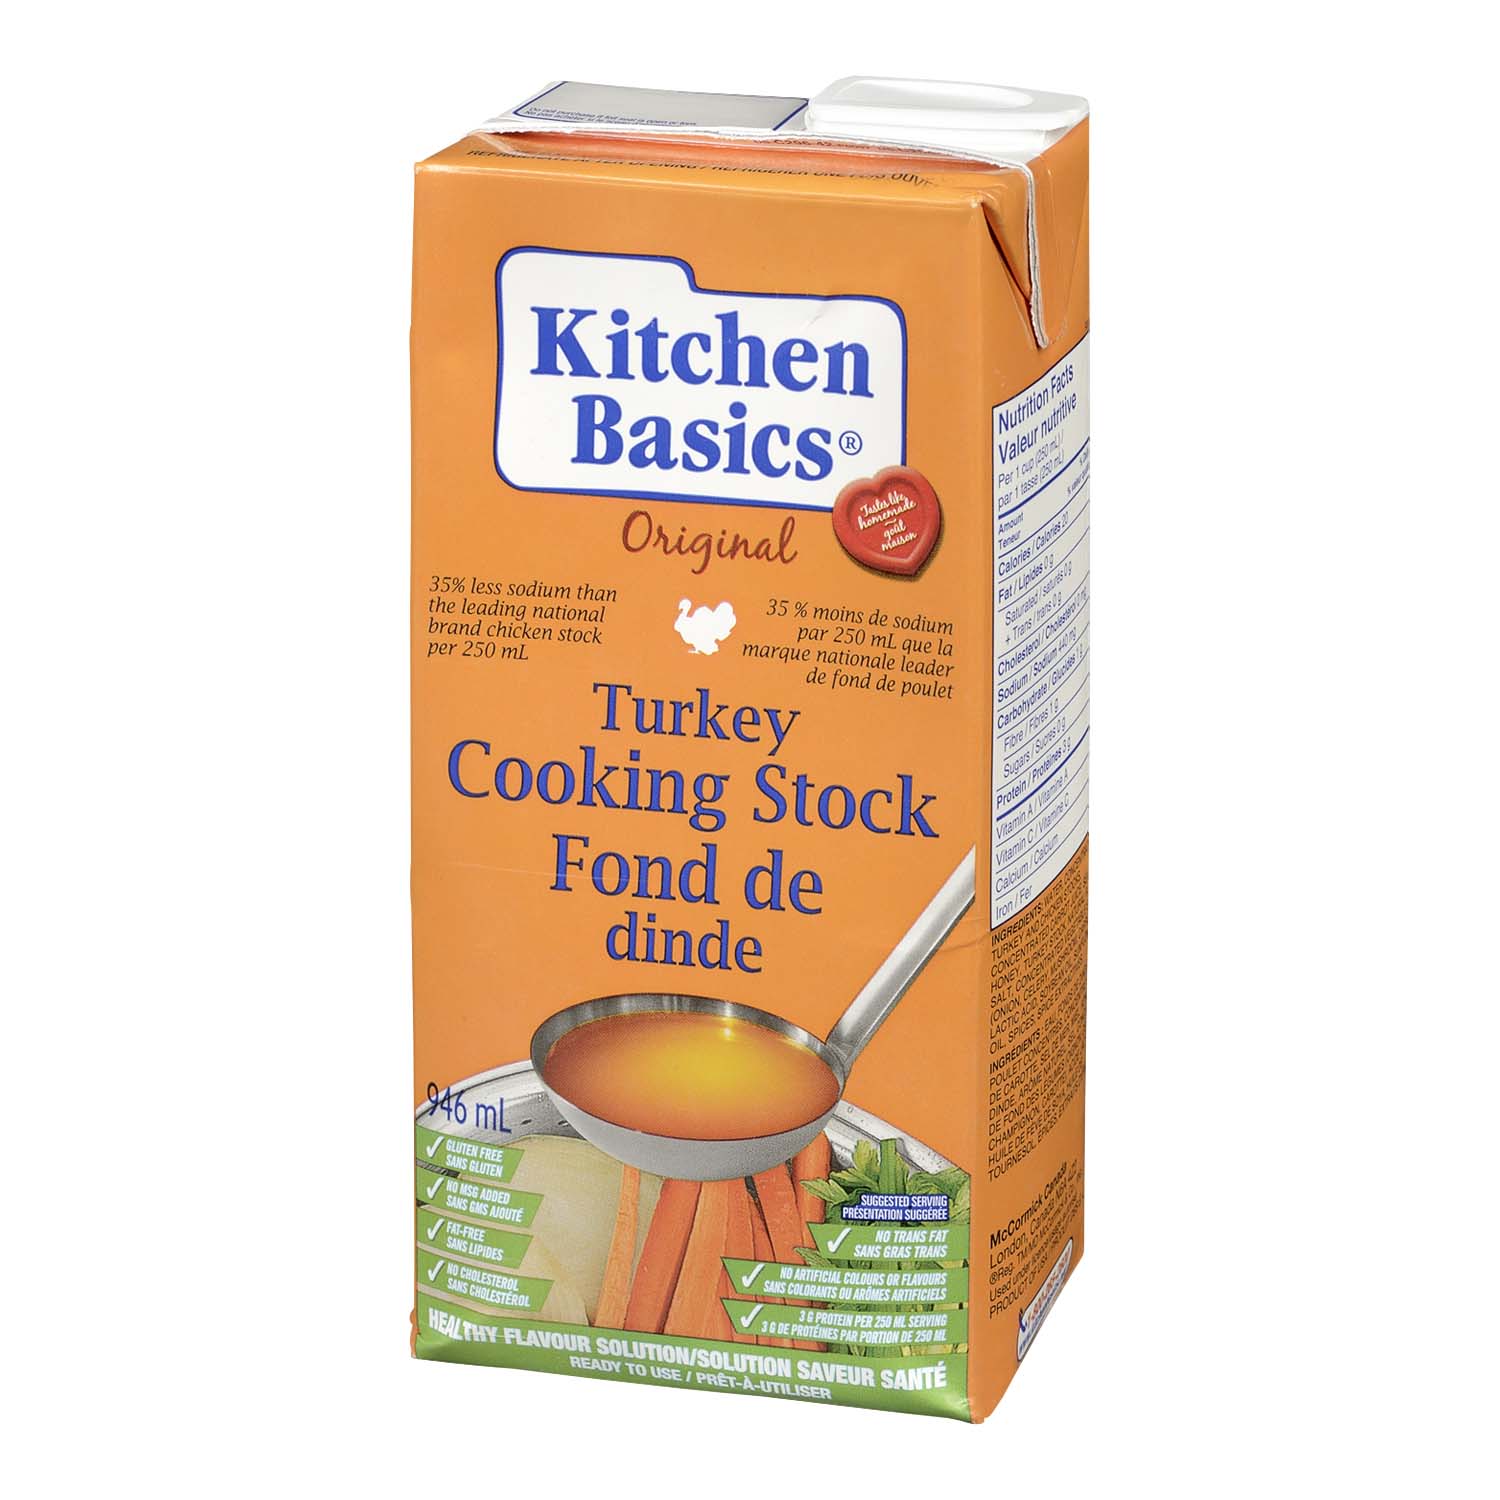 Kitchen Basics Turkey Cooking Stock Original 946 ml | Powell's Supermarkets